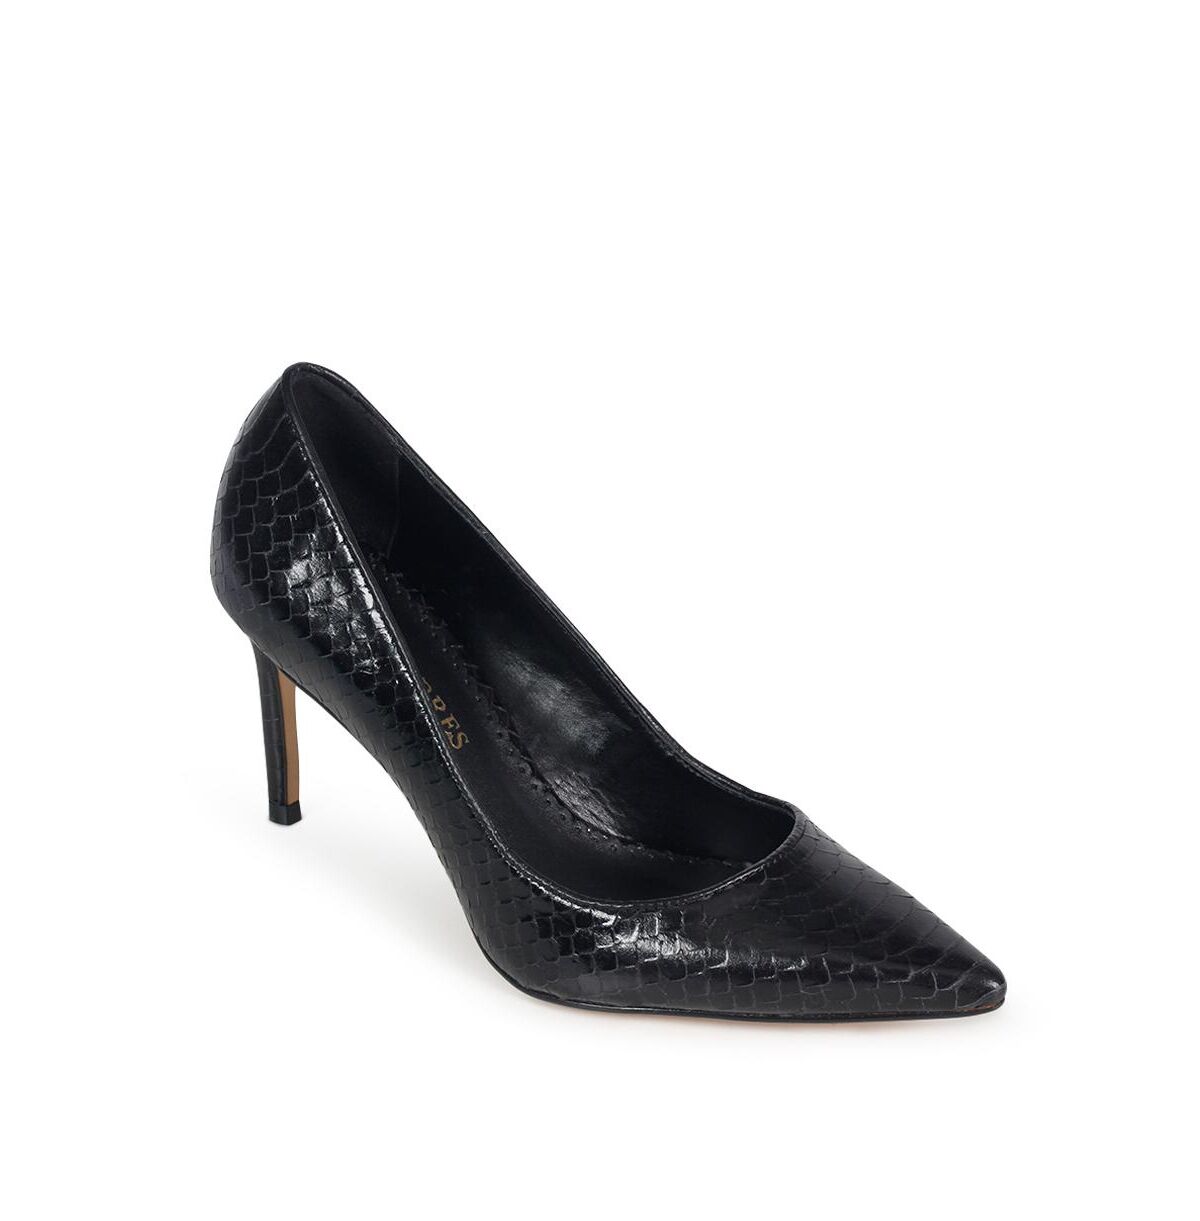 Paula Torres Shoes Women's Torres Pointed-Toe Stiletto Pumps - Black